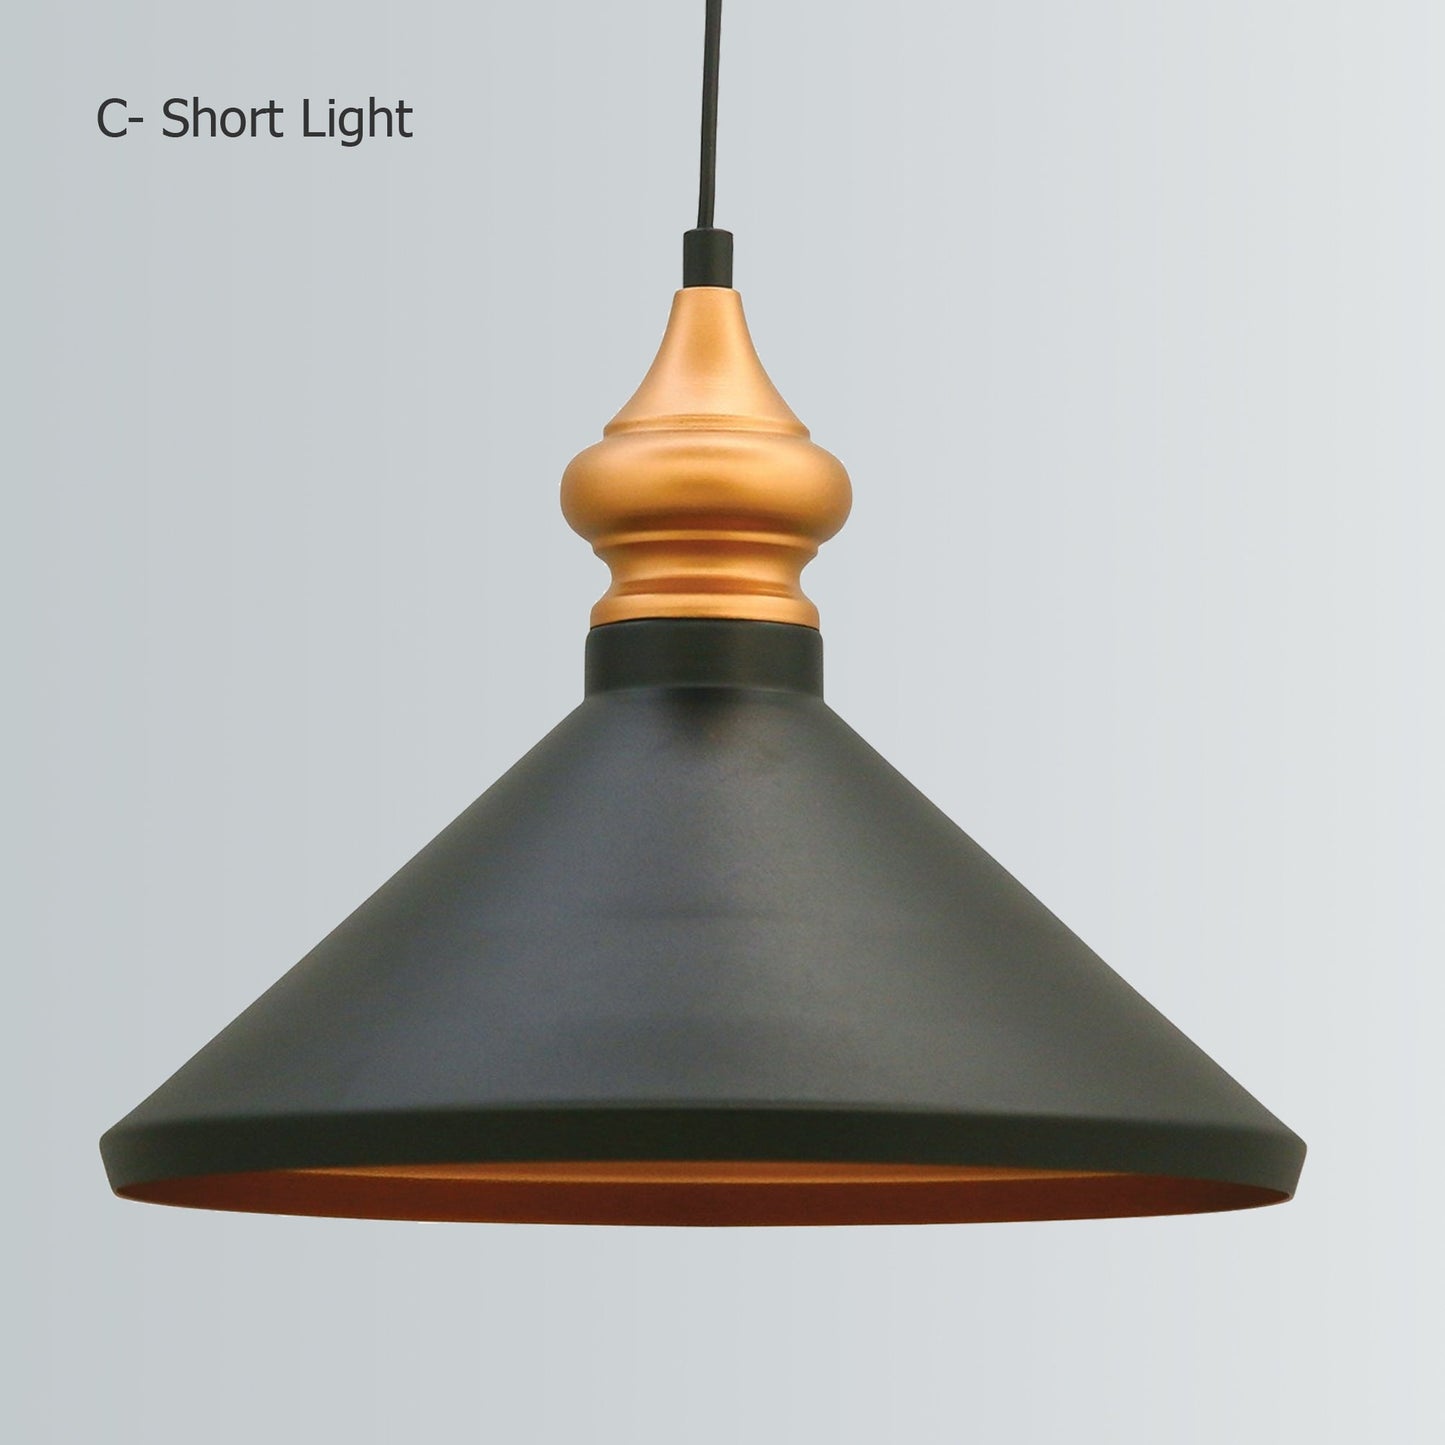 Authentic Light, Hanging Loft Lamp, Dome Light, Industrial Lighting, Pendant Light, Vintage Pendant Light, Hanging Home Lighting, Black